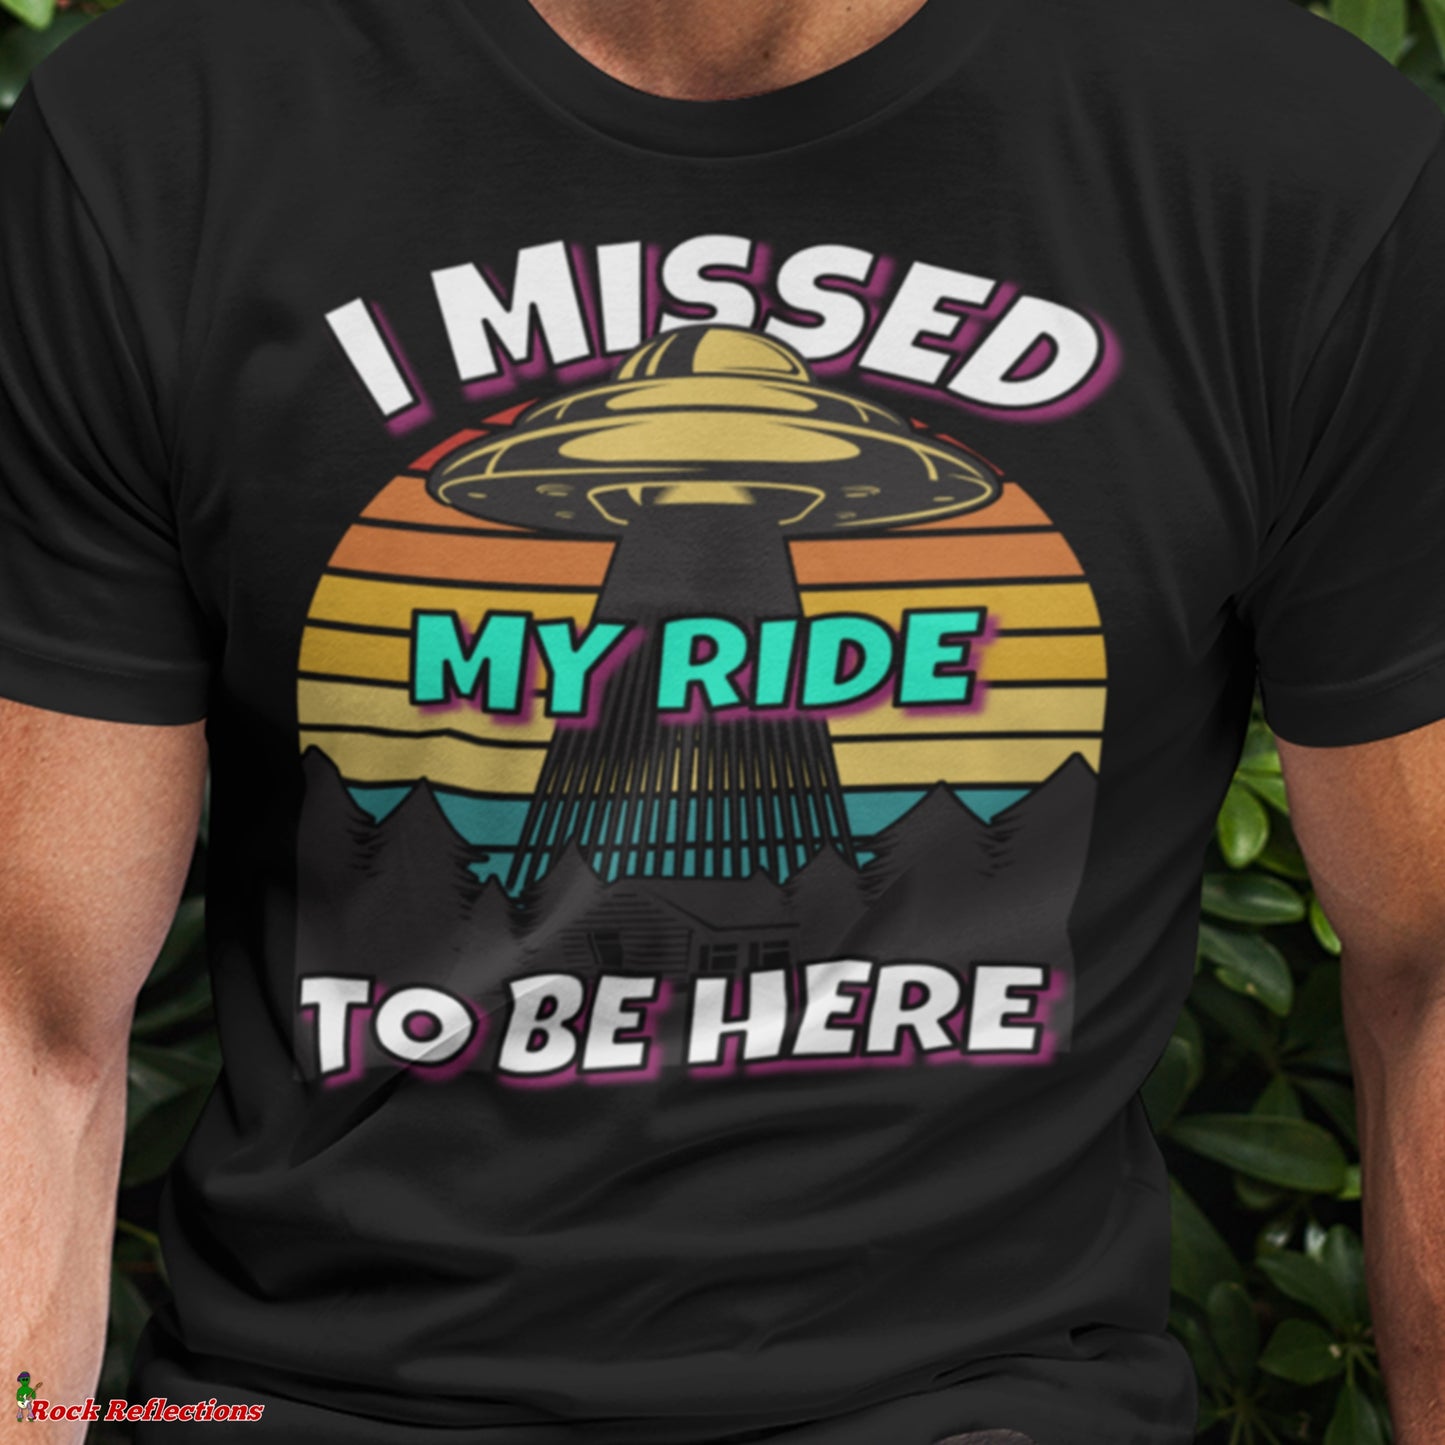 UFO – I Missed My Ride SPOD